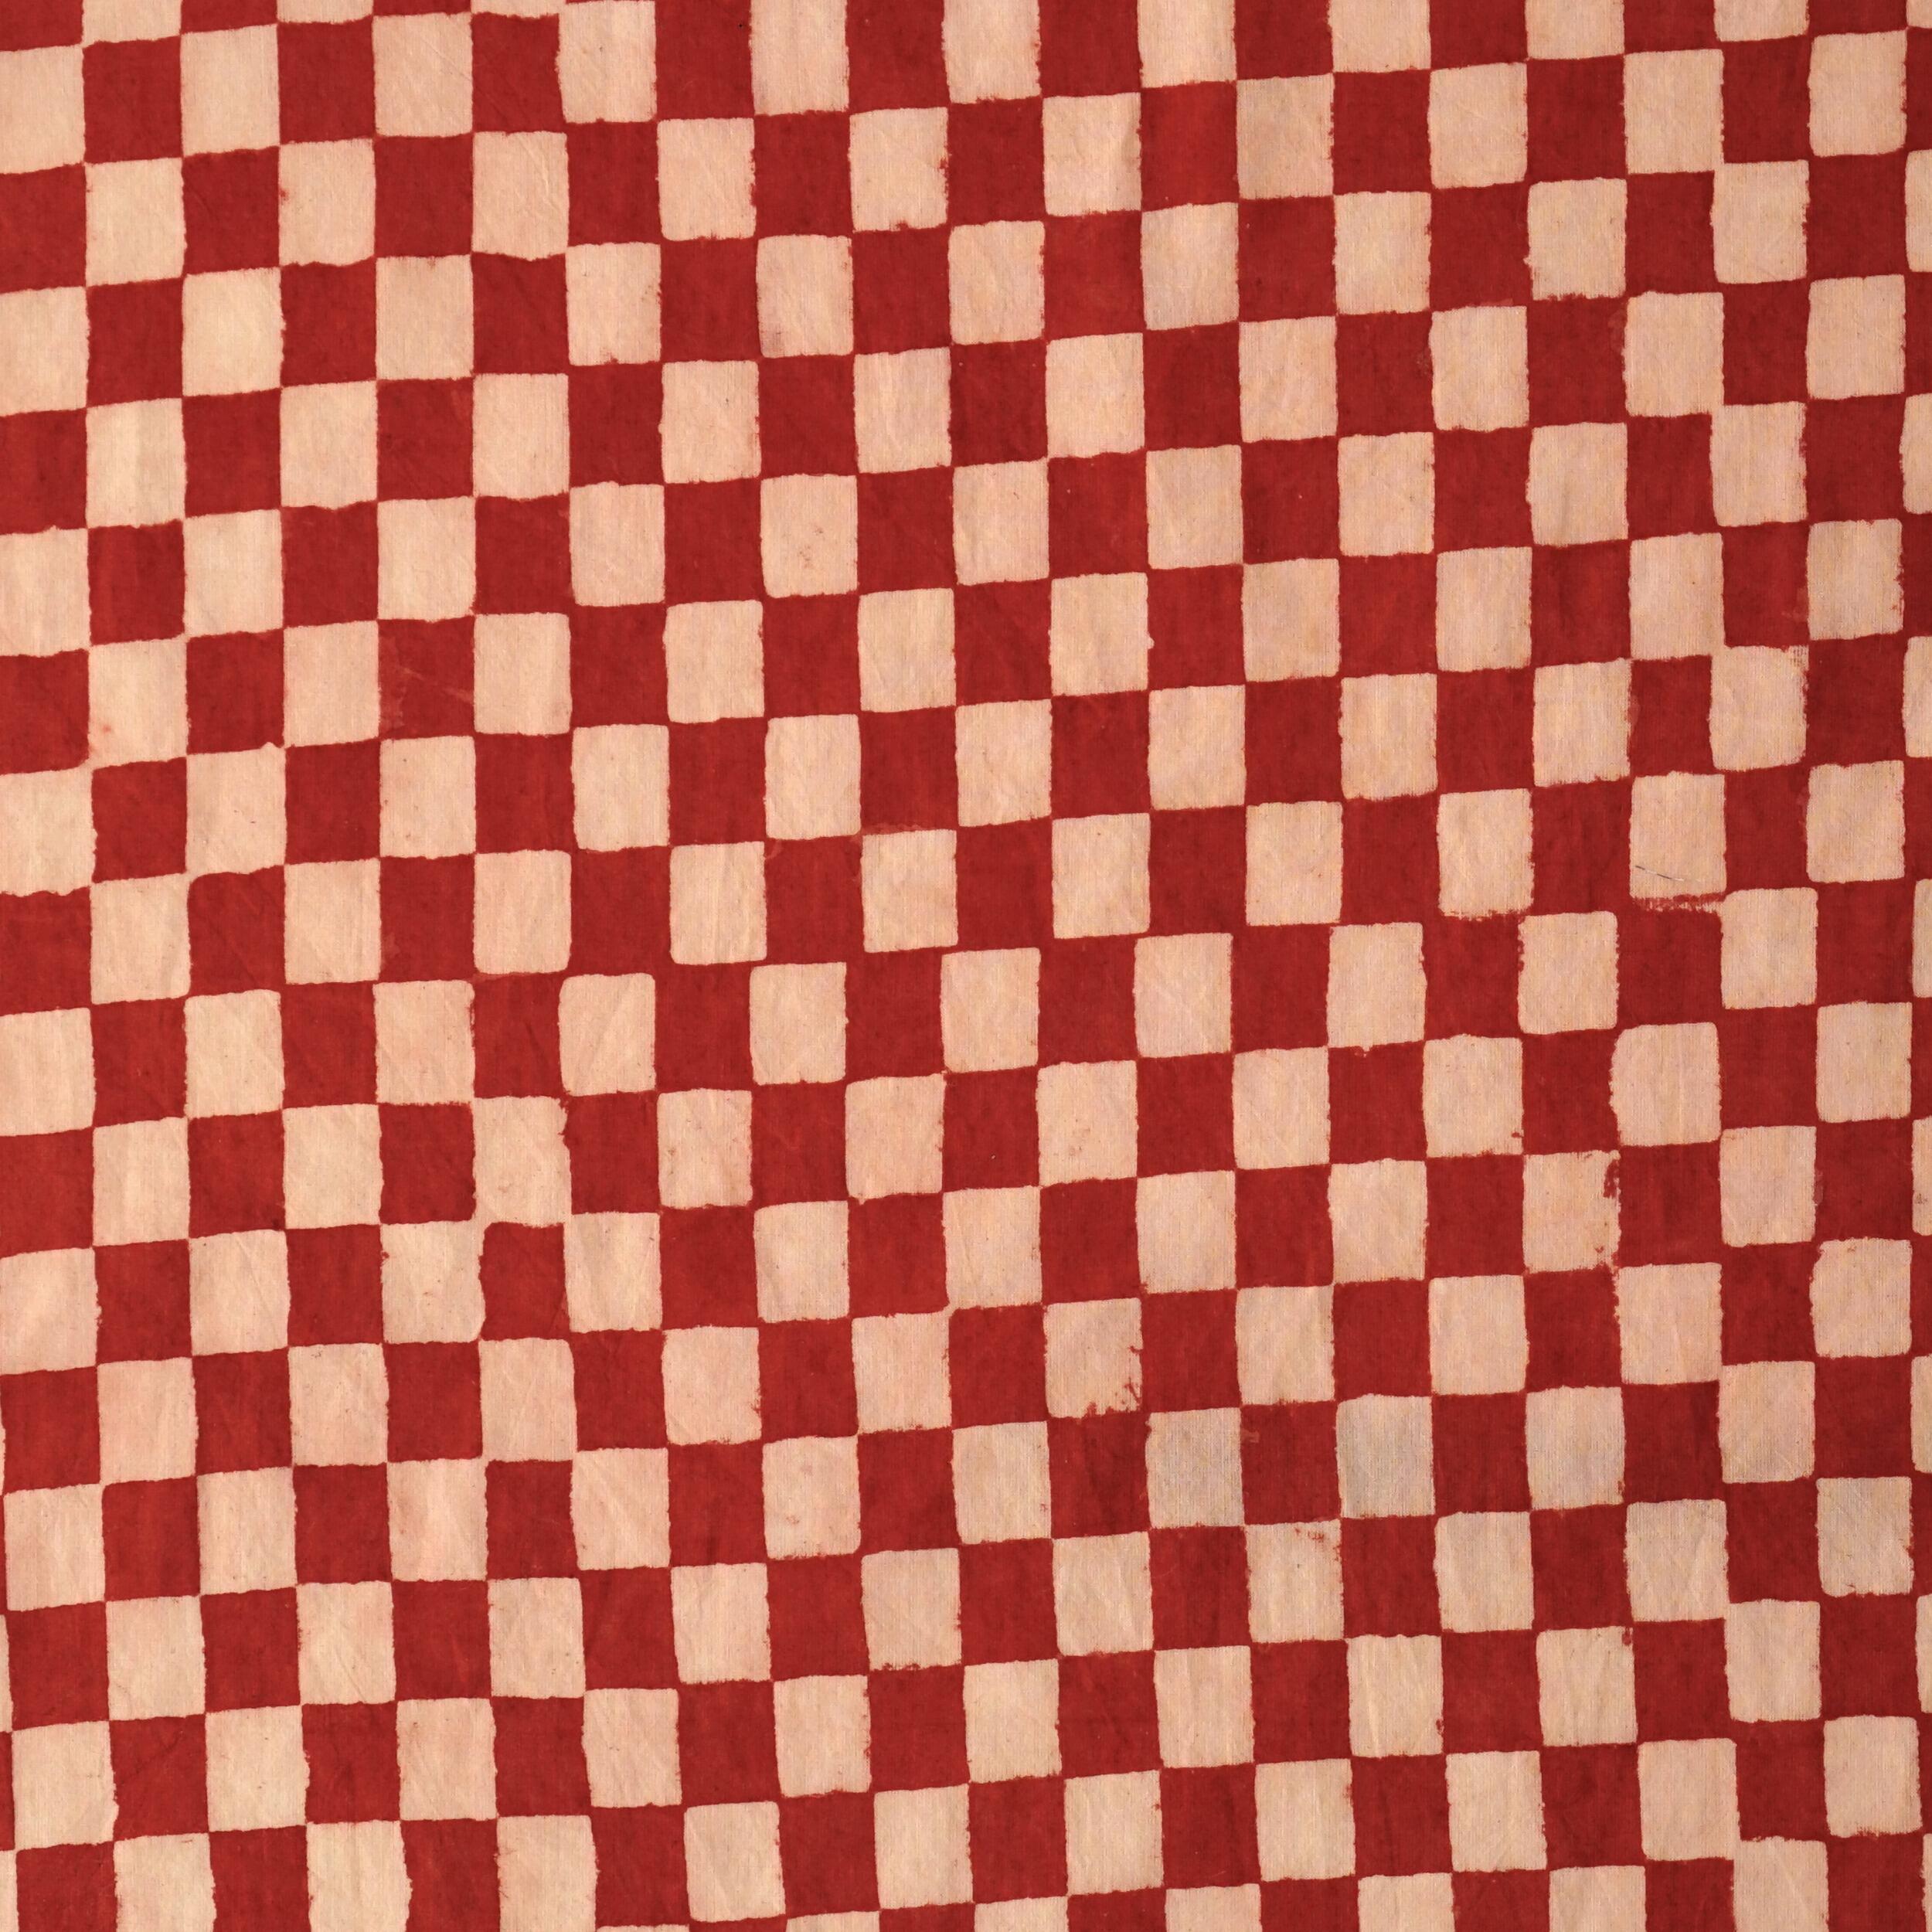 Hand Block-Printed Cotton - Checkers Print - Red Alizarin & White - Flat